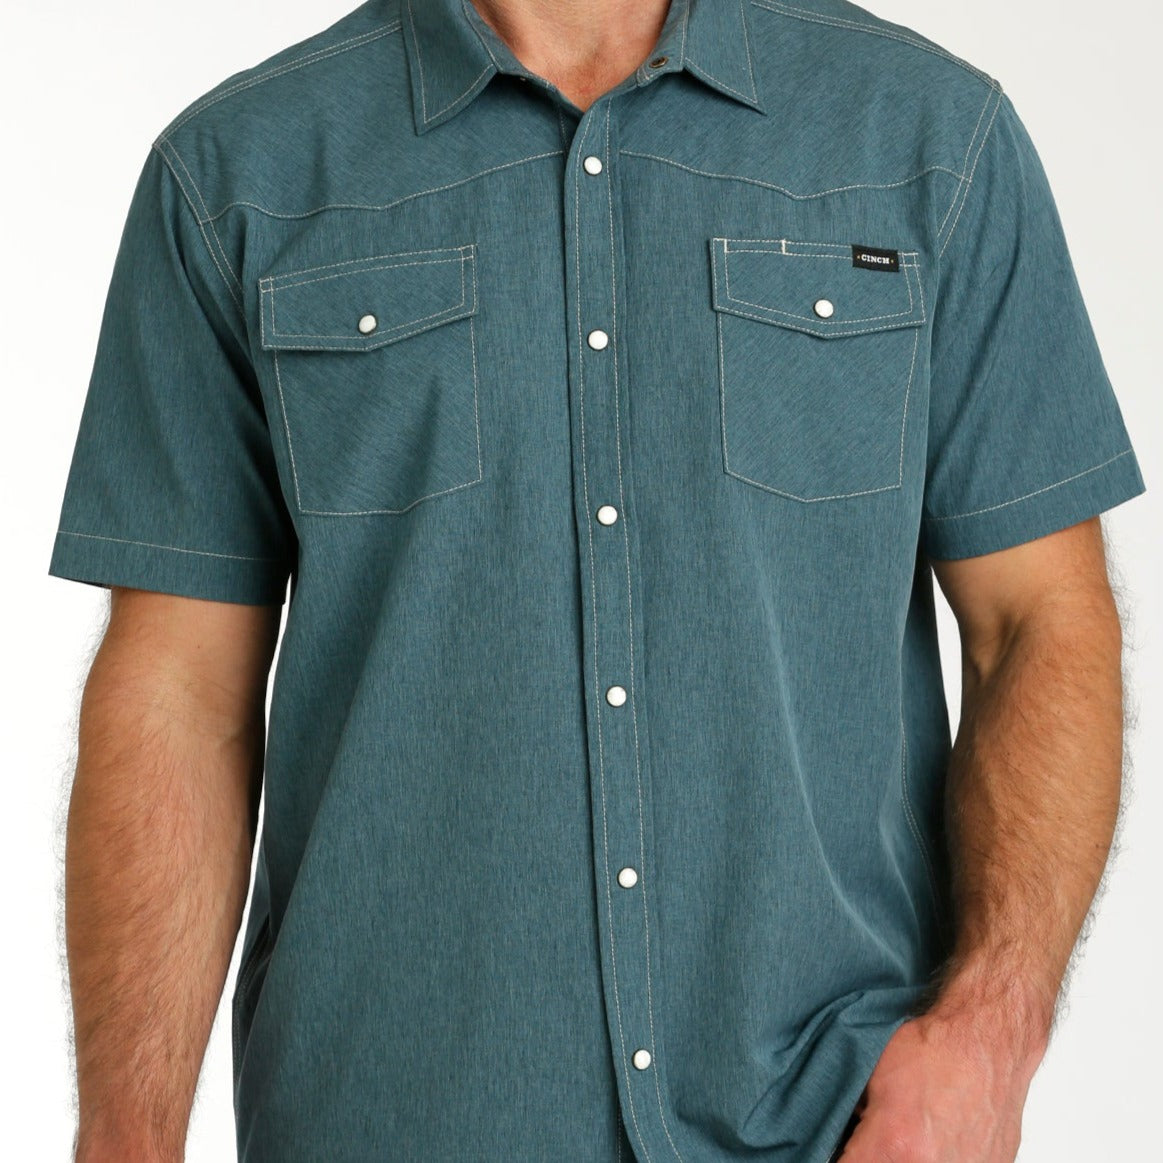 Cinch Men's Solid Short Sleeve Camp Shirt in Blue